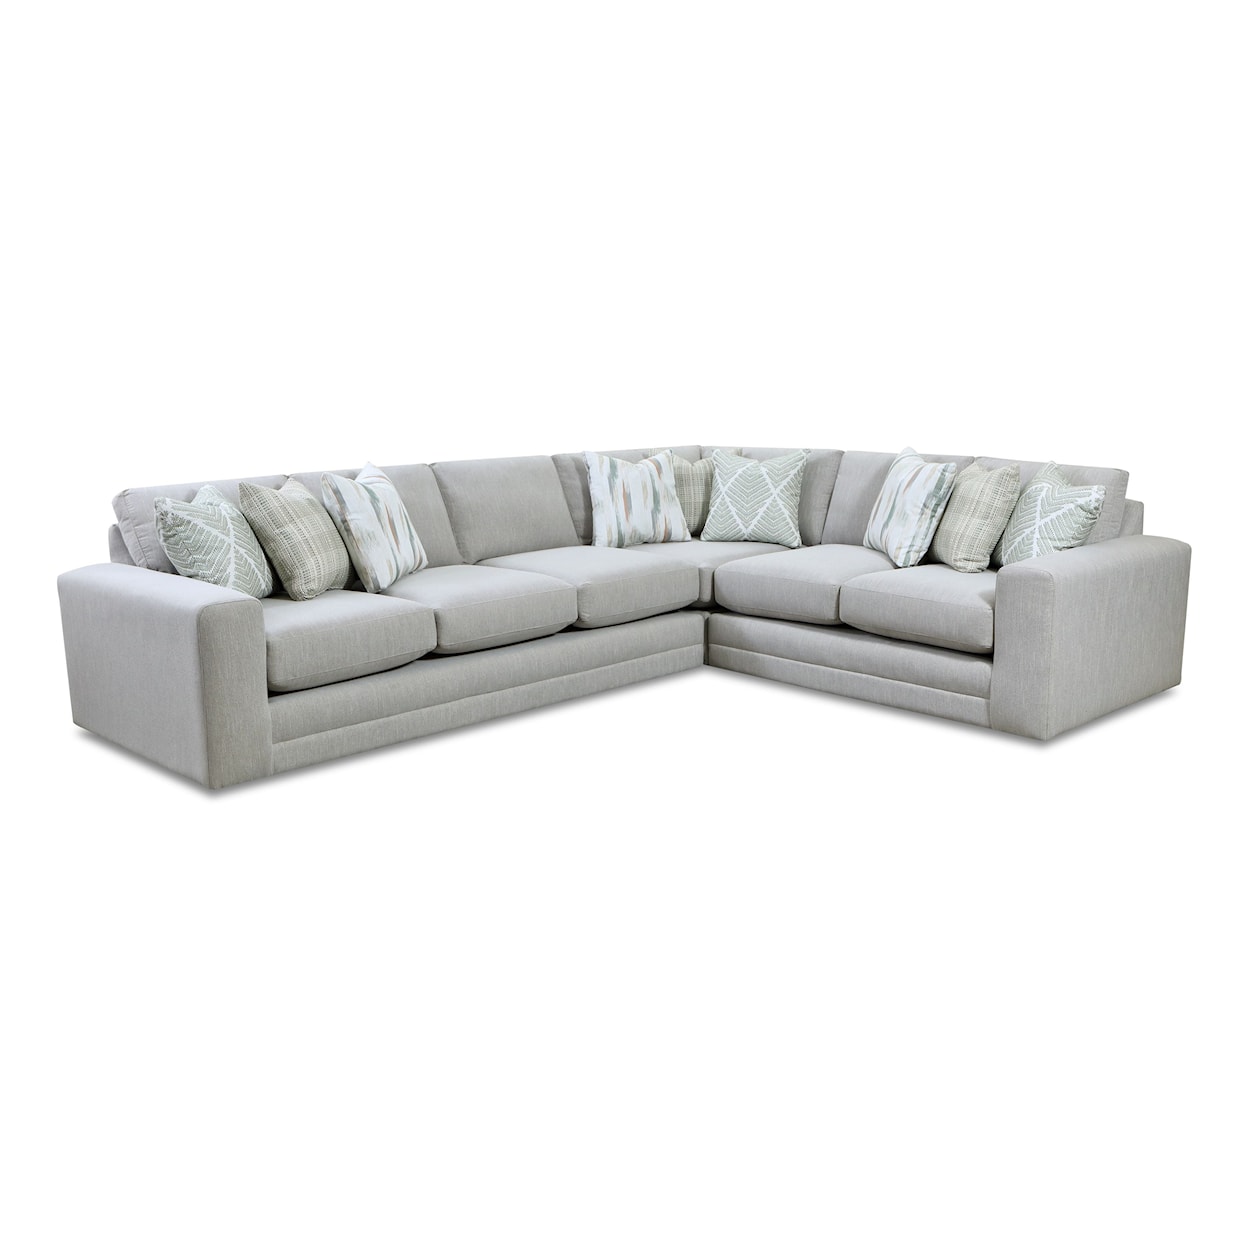 Fusion Furniture 7000 CHARLOTTE CREMINI 3-Piece Sectional